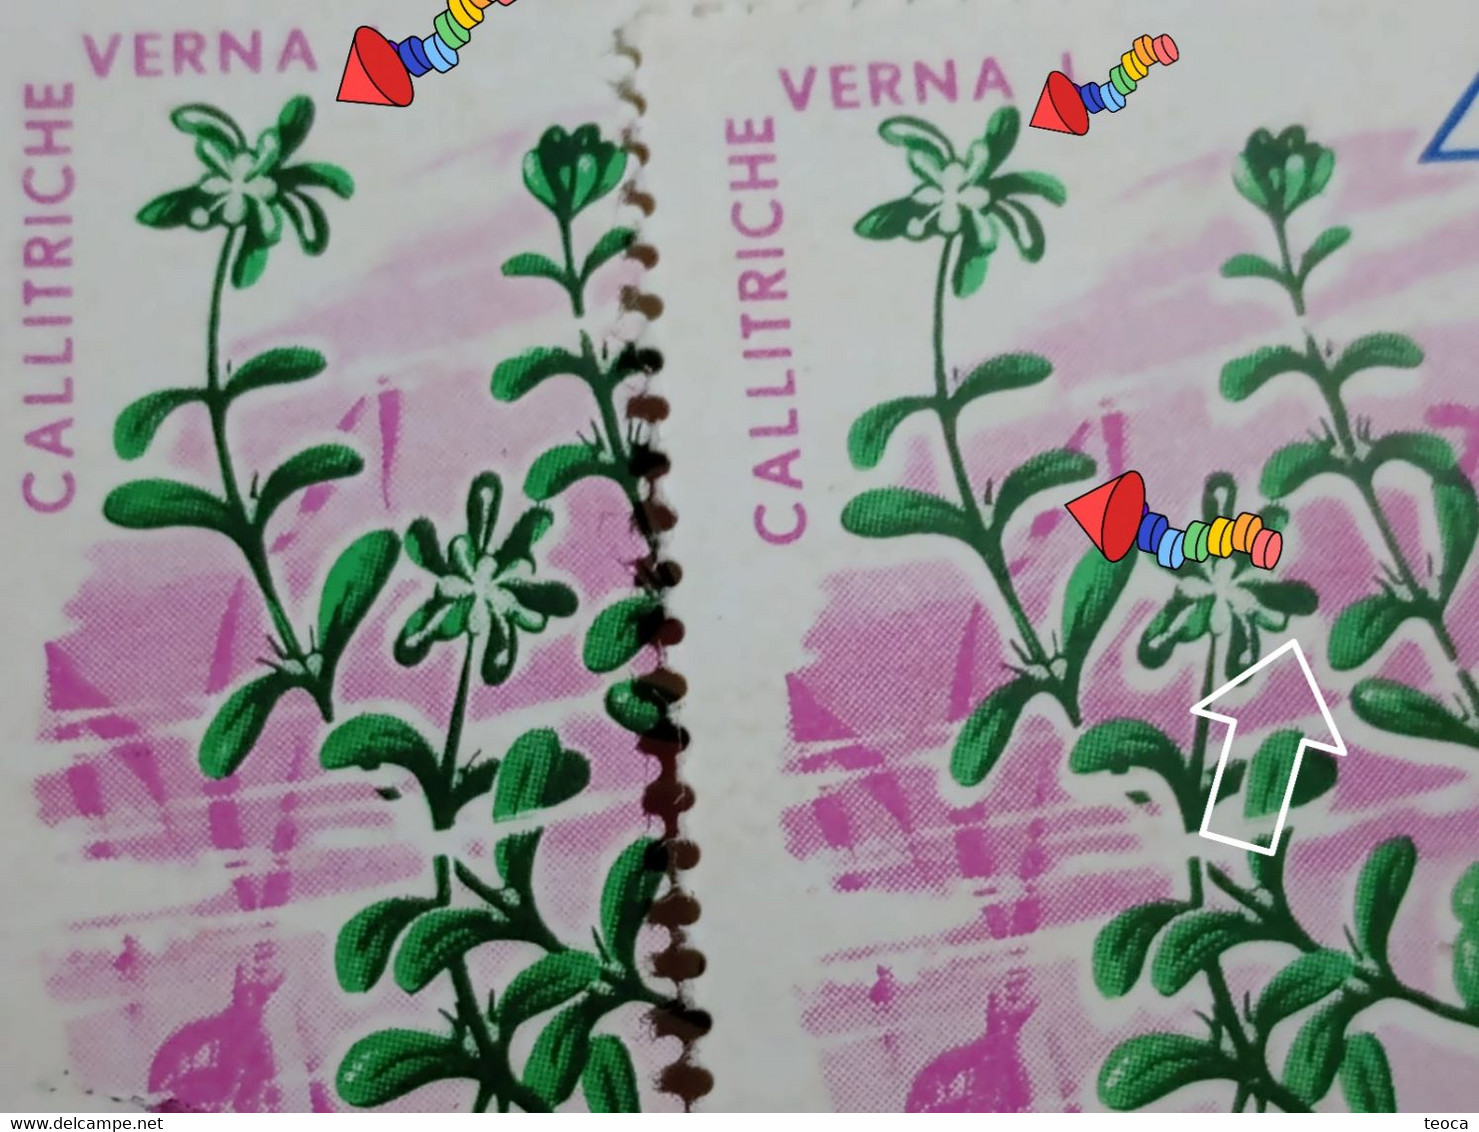 Stamps Errors Romania 1966 # Mi 2528 Printed With Misplaced Plants Flower Image Used - Errors, Freaks & Oddities (EFO)